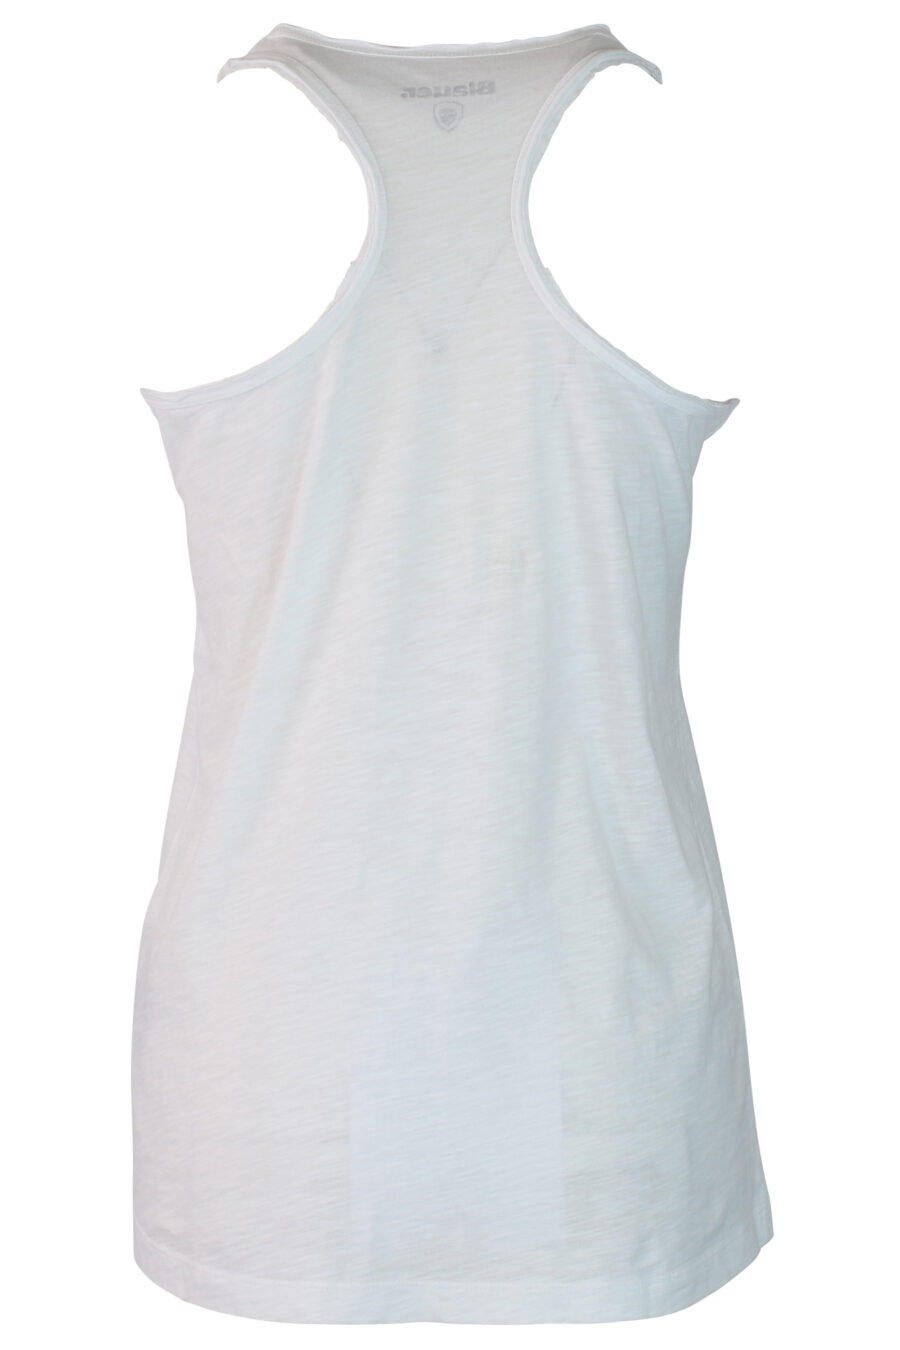 Camiseta sin mangas blanca con maxilogo plateado - IMG 0373